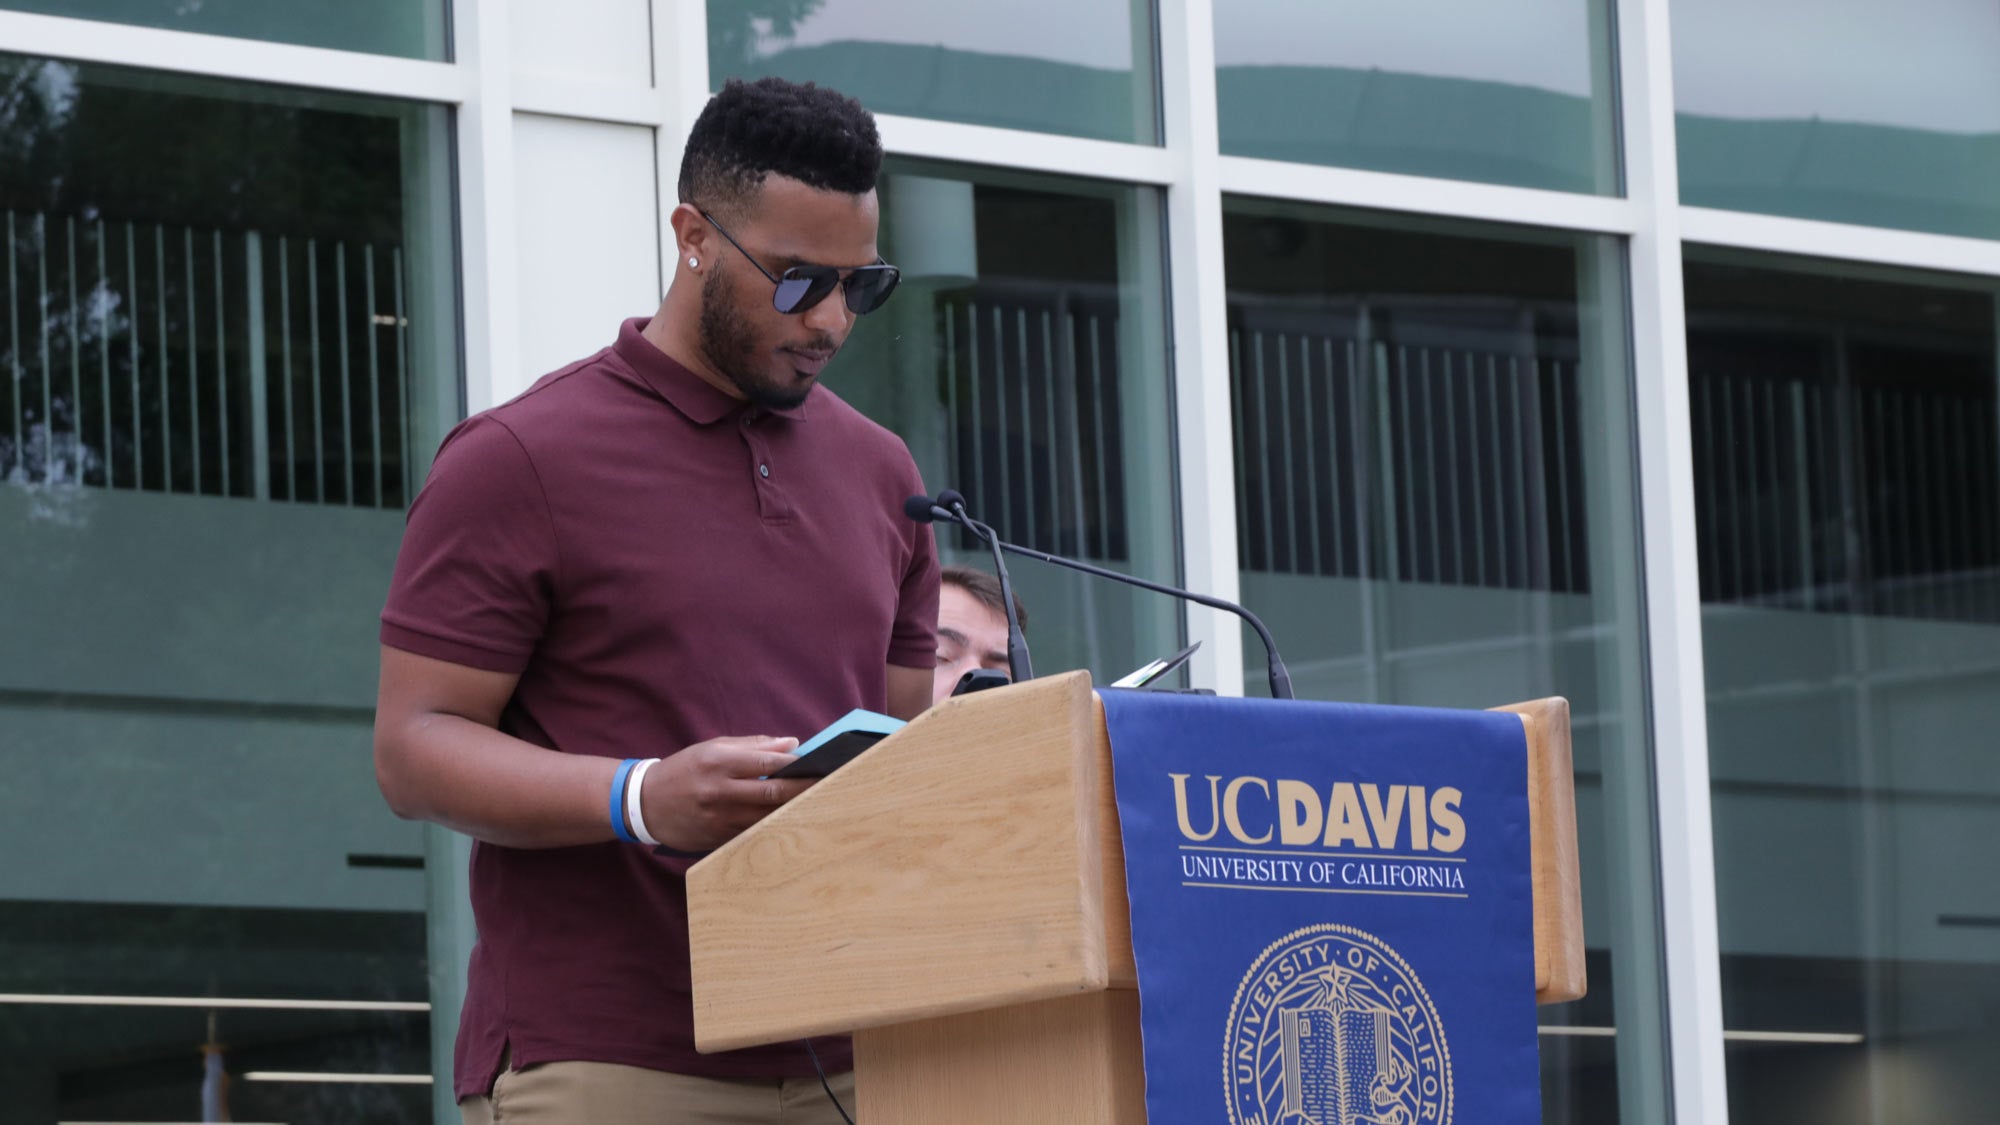 Man read names from UC Davis podium